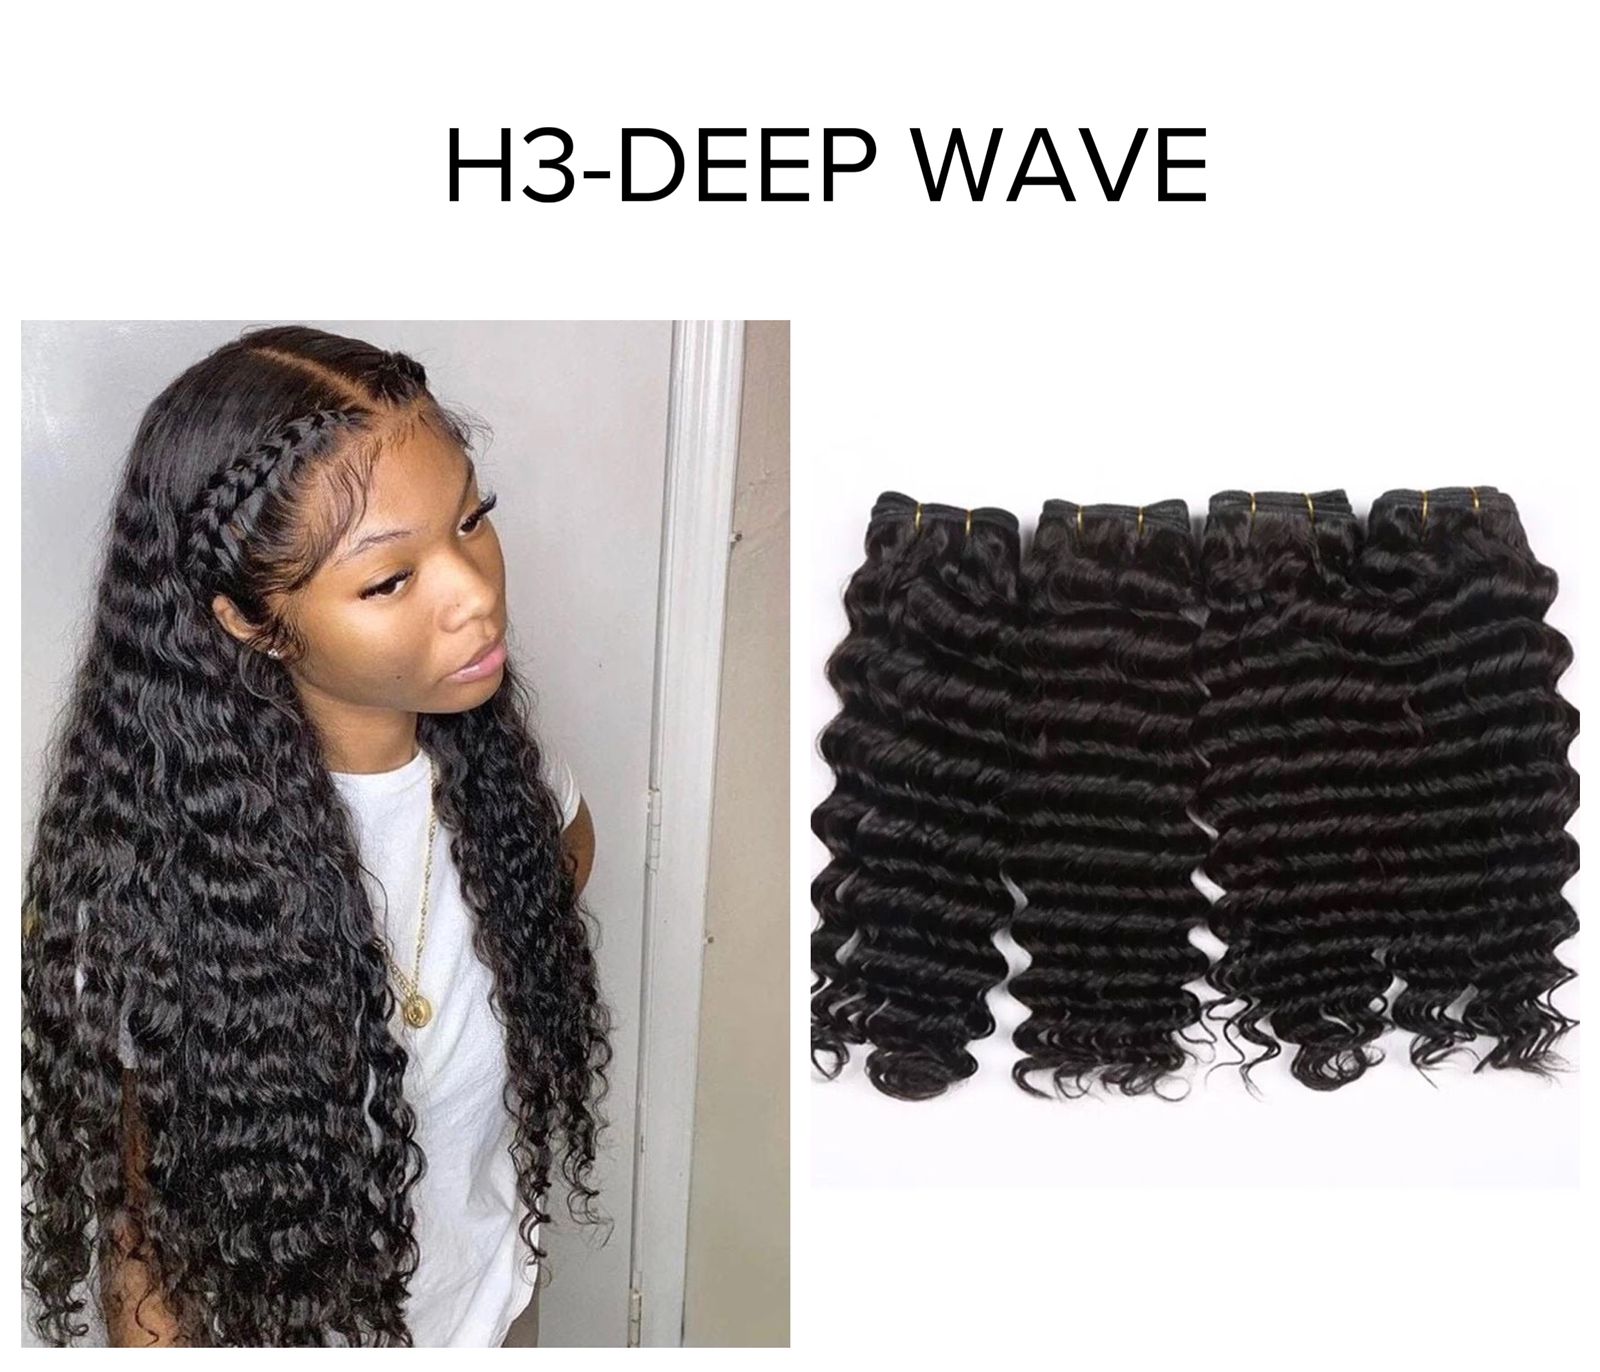 How To Maintain Deep Wave Hair